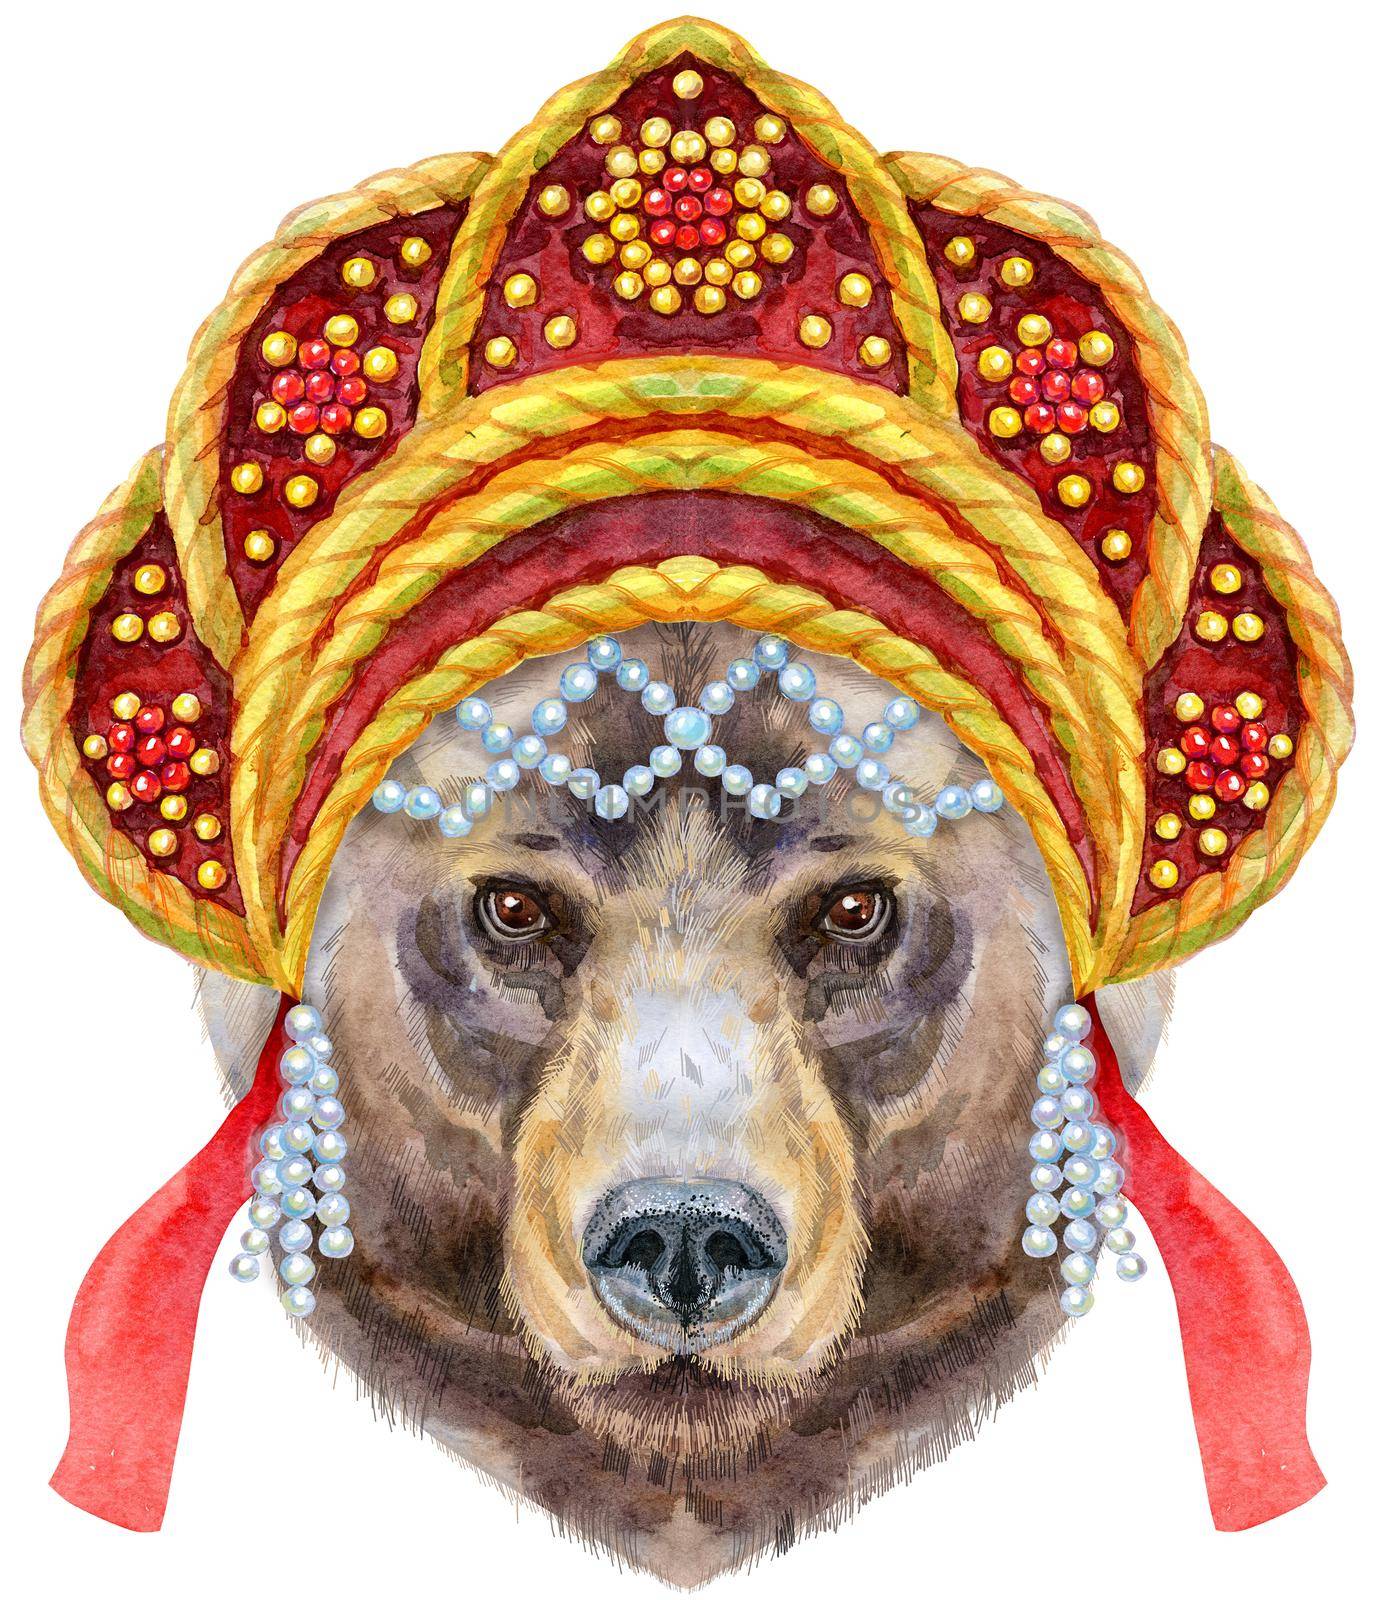 Bear head in Russian headdress kokoshnik. Watercolor bear painting illustration isolated on white background by NataOmsk